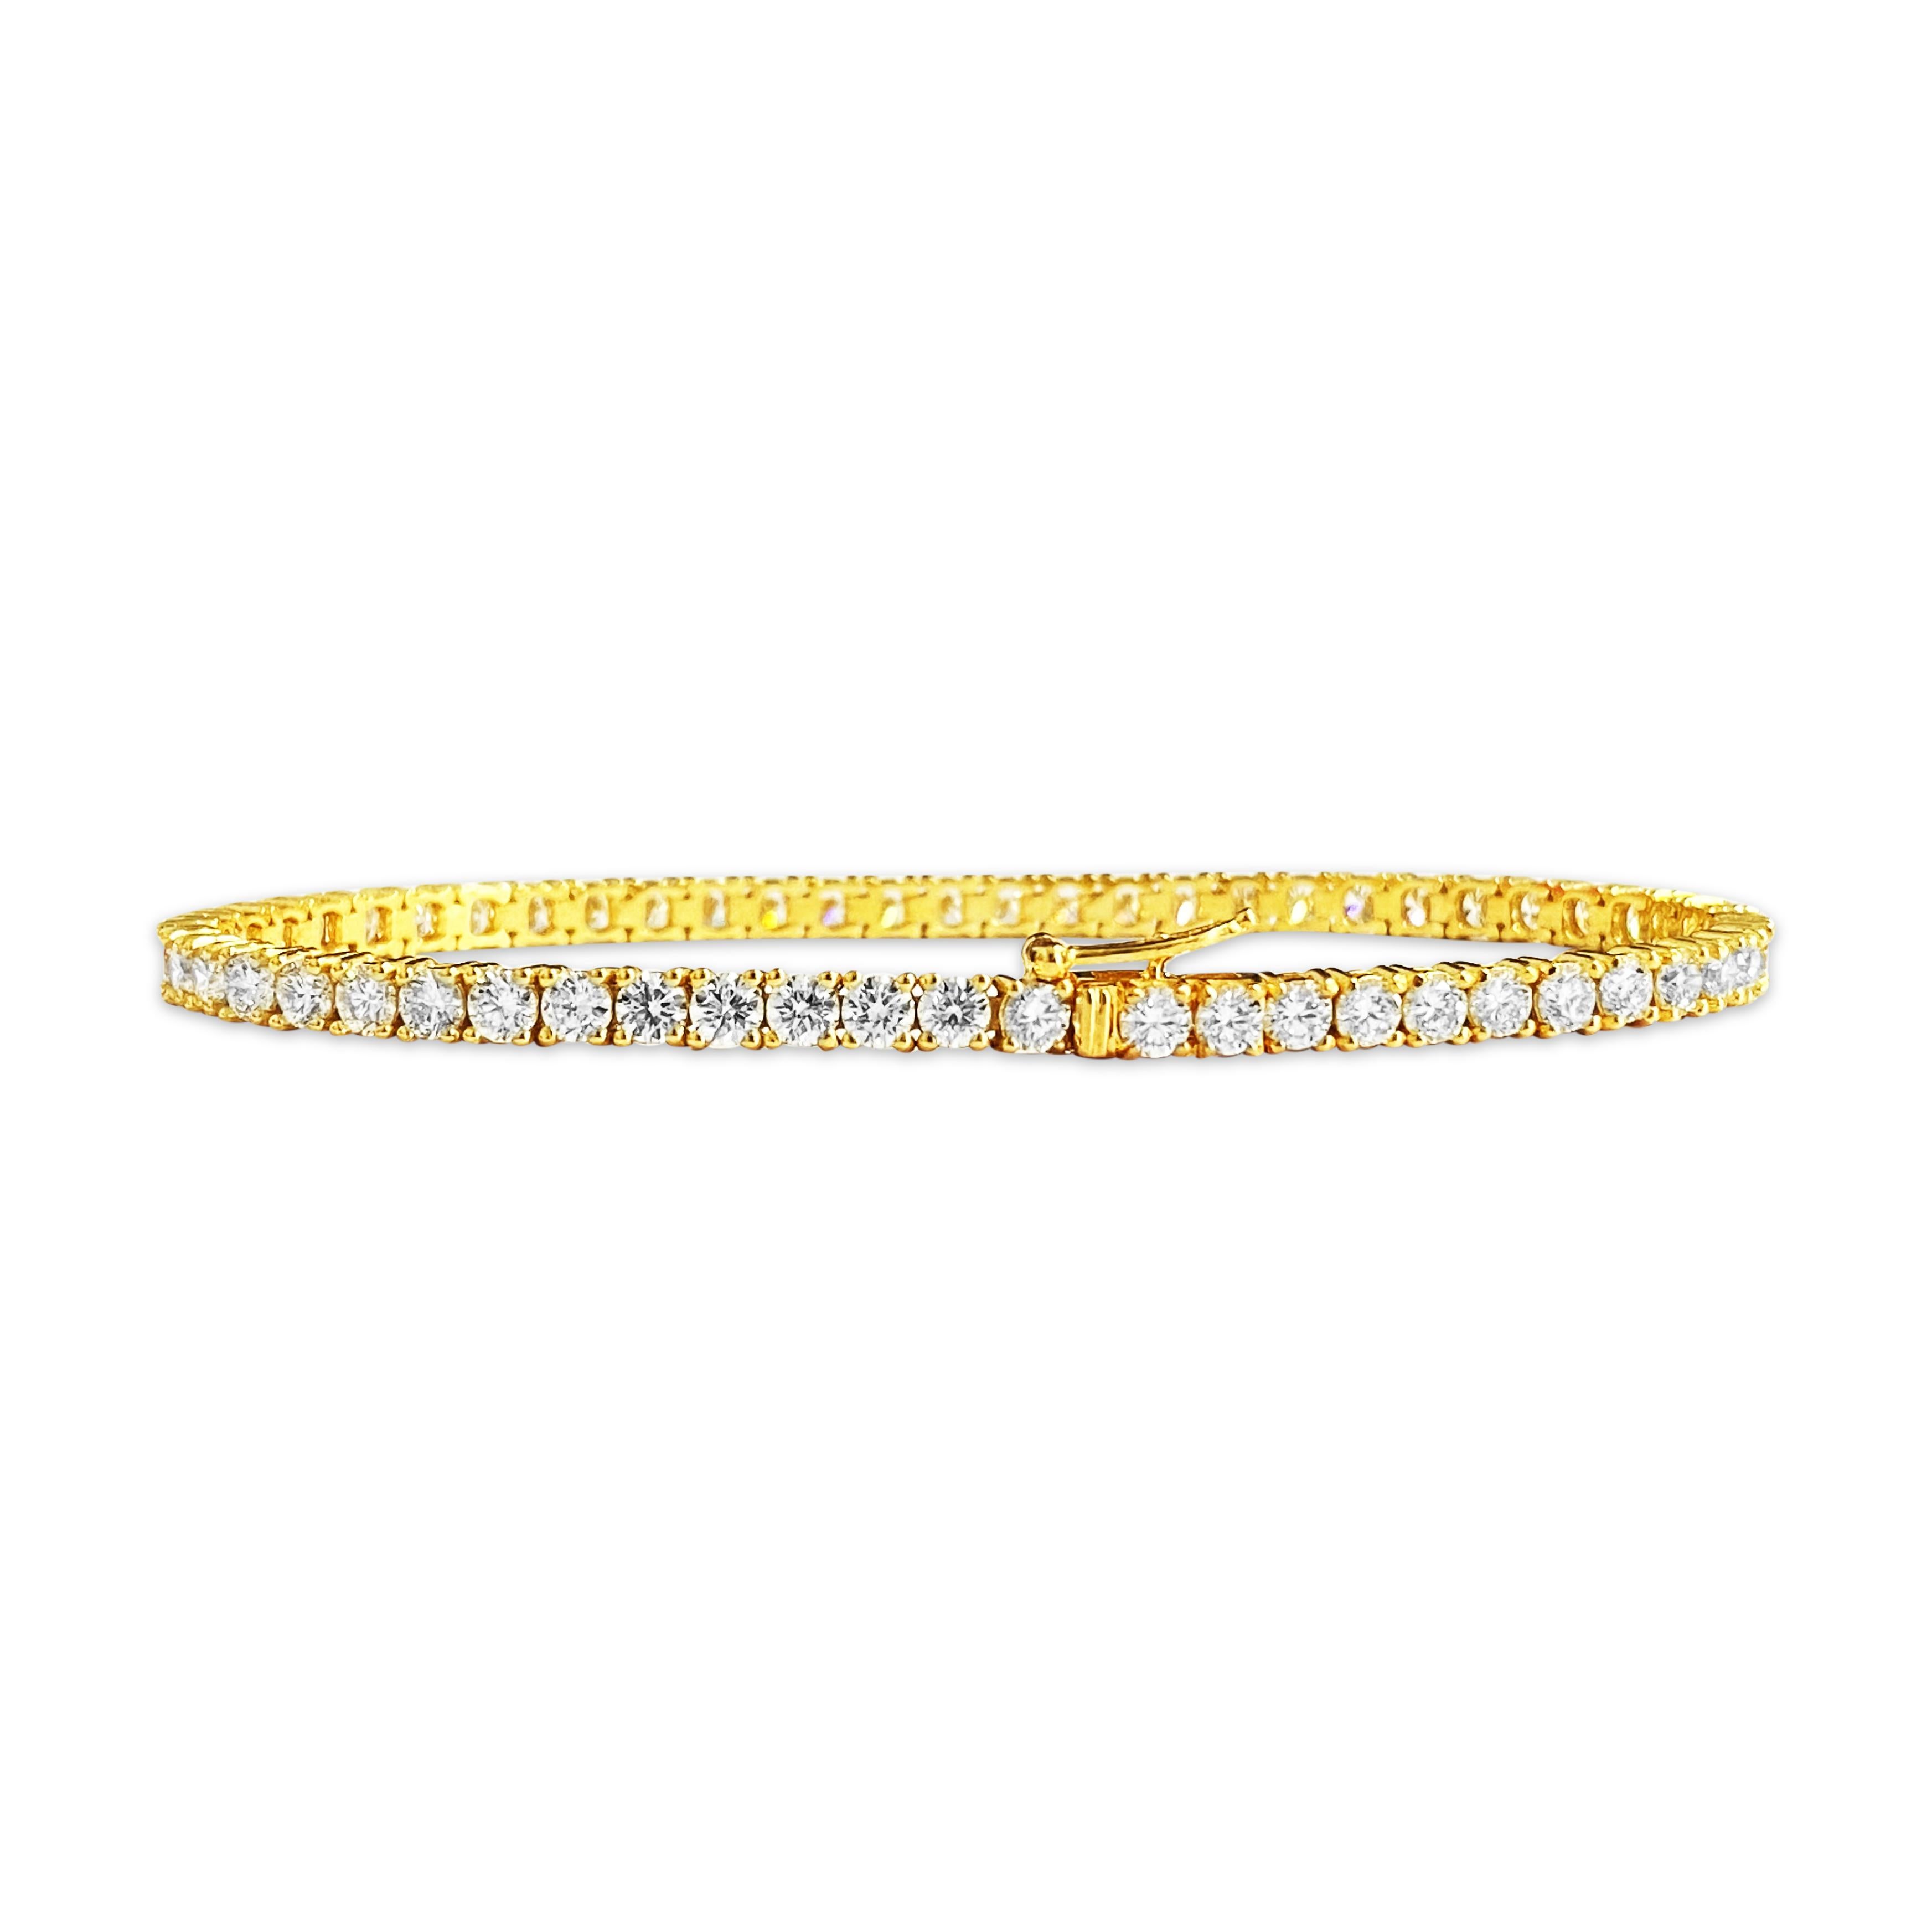 5.60 Carat VVS Diamond Tennis Bracelet in 14 Karat Yellow Gold In New Condition For Sale In Miami, FL